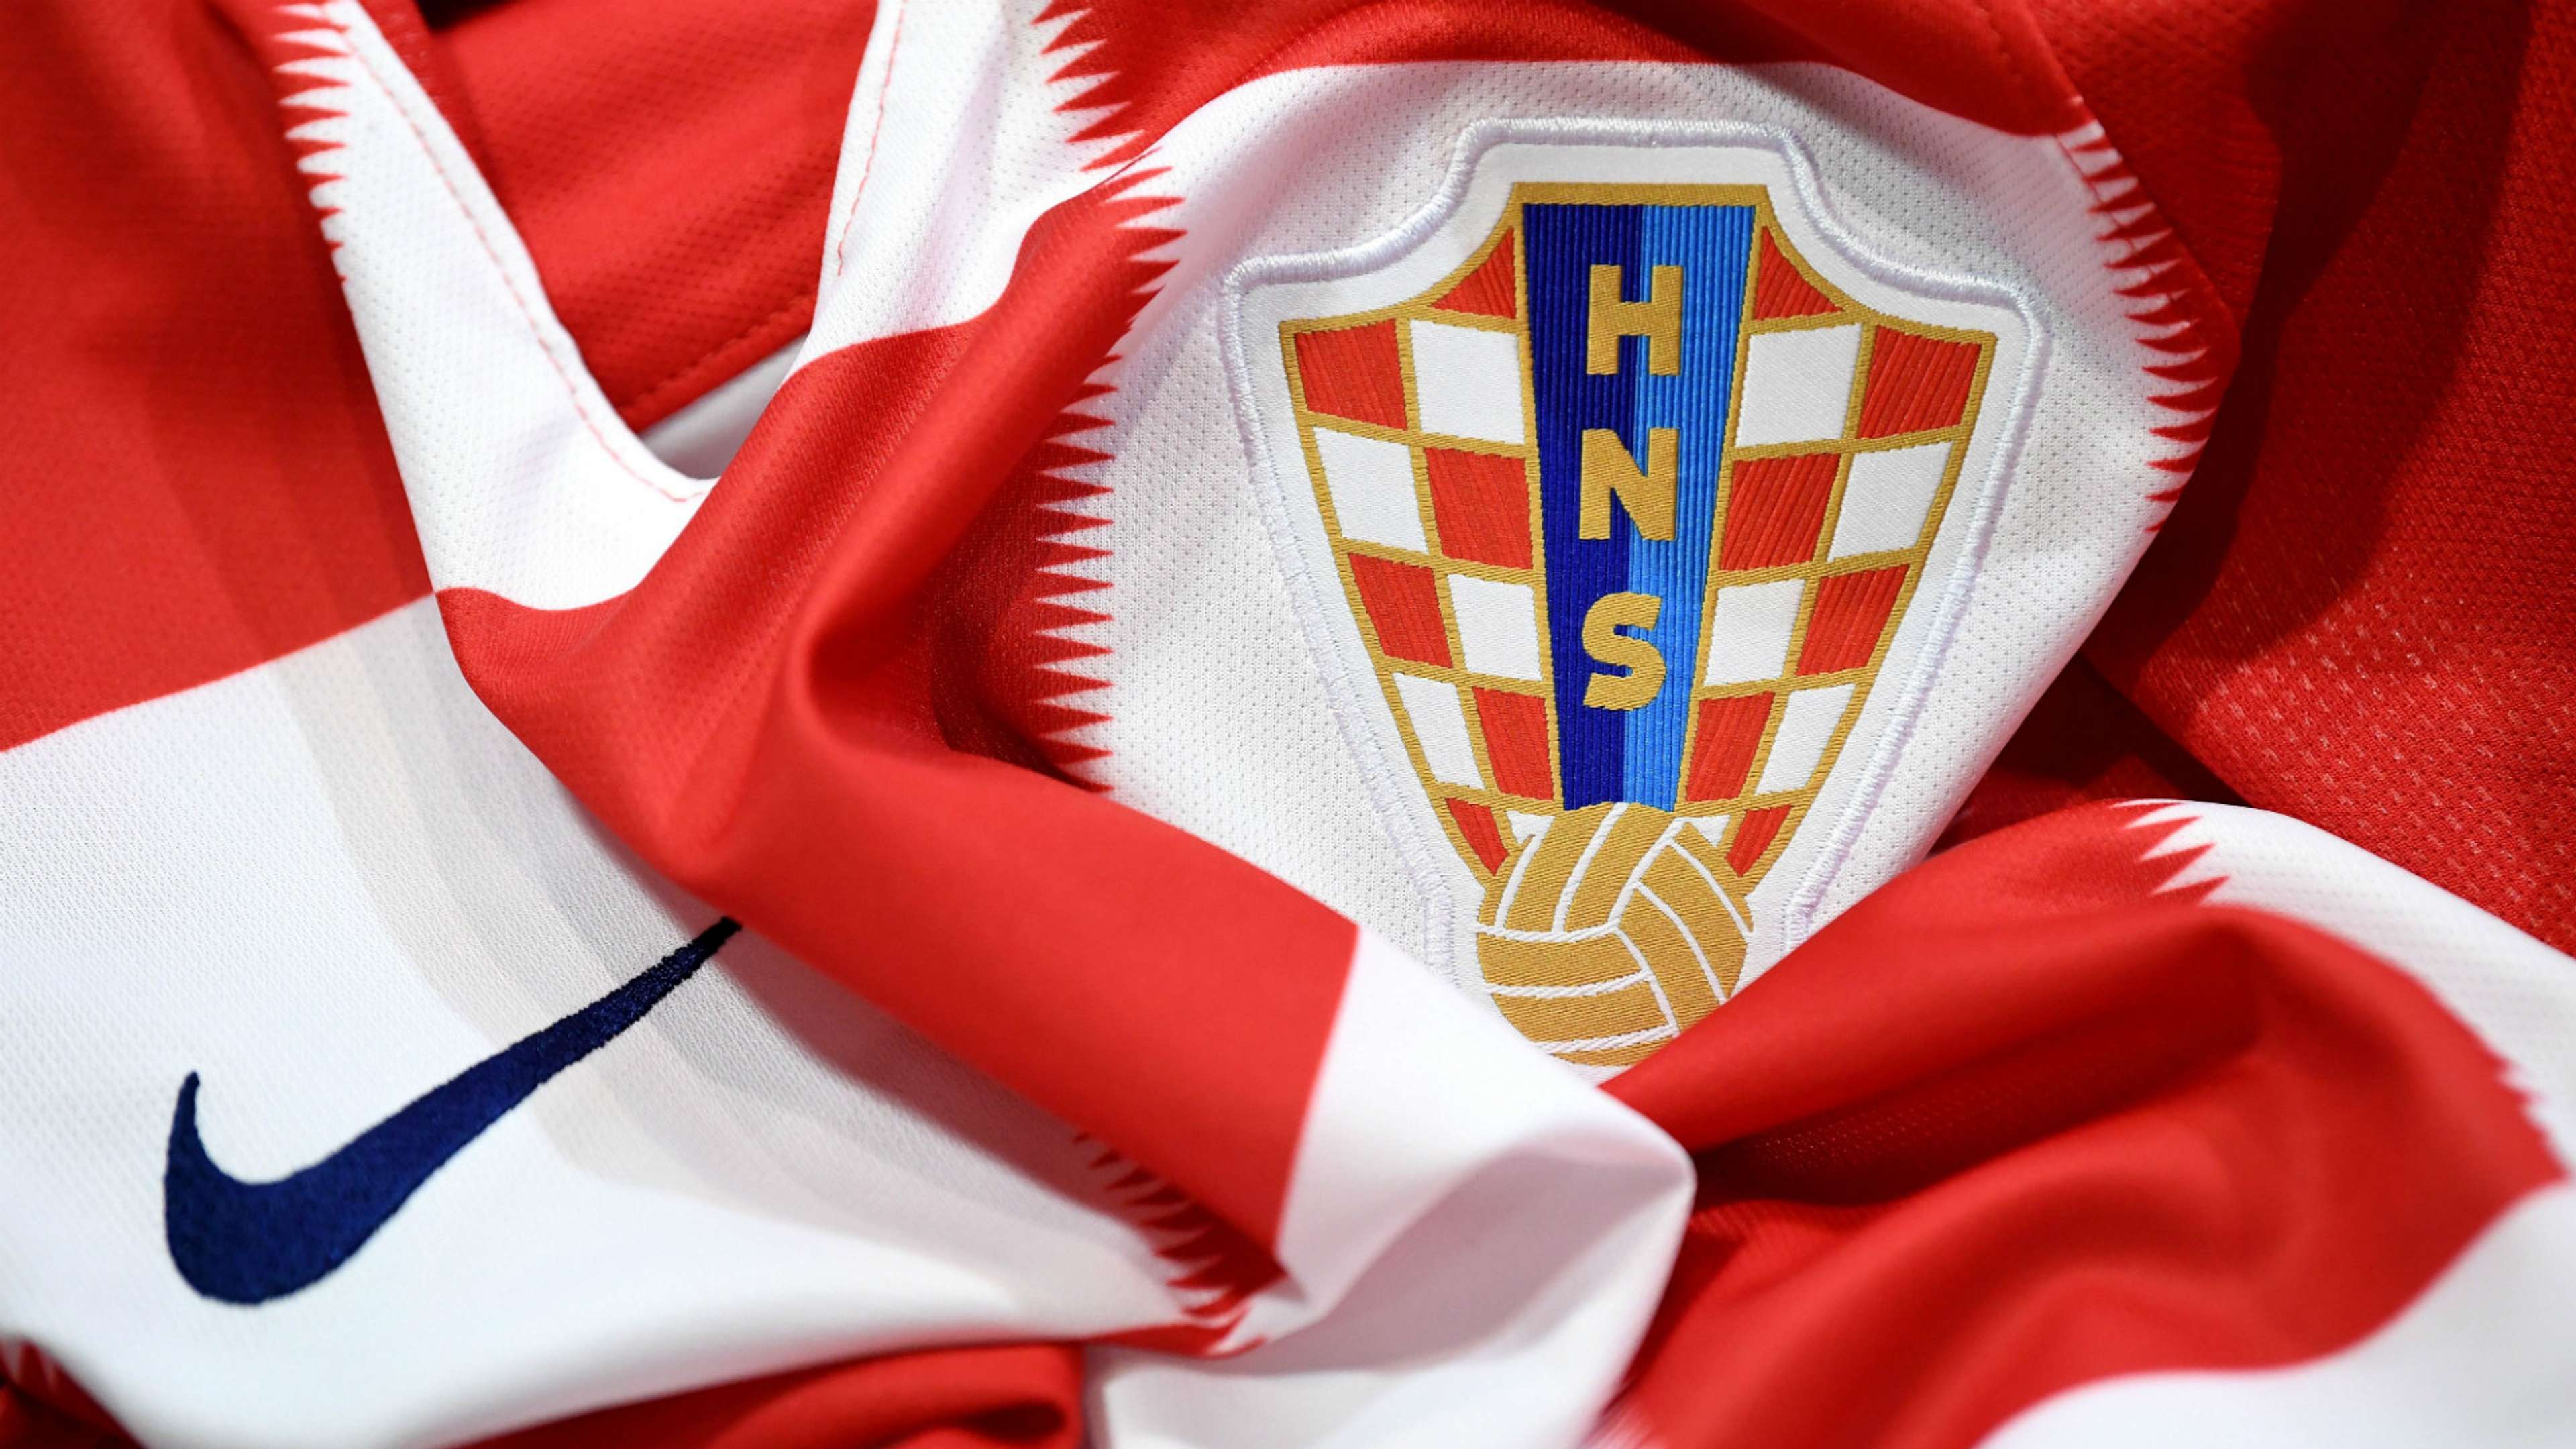 Croatia Jersey